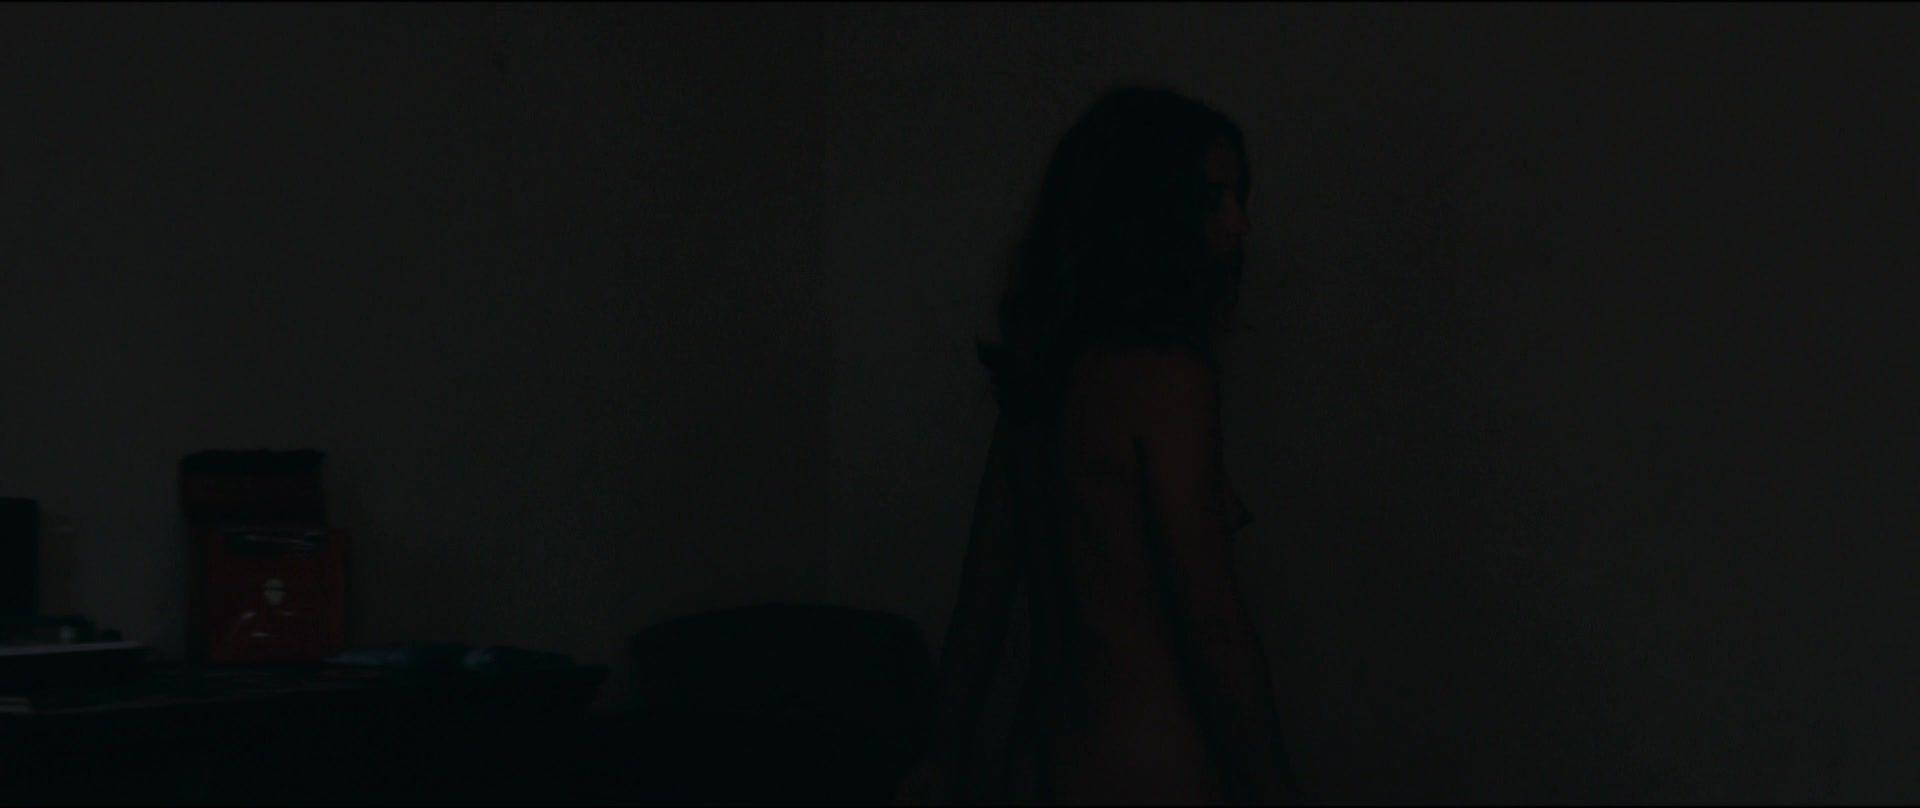 Bathroom Outdoors Lesbian Sex Video of French erotic film "La belle saison" Ninfeta